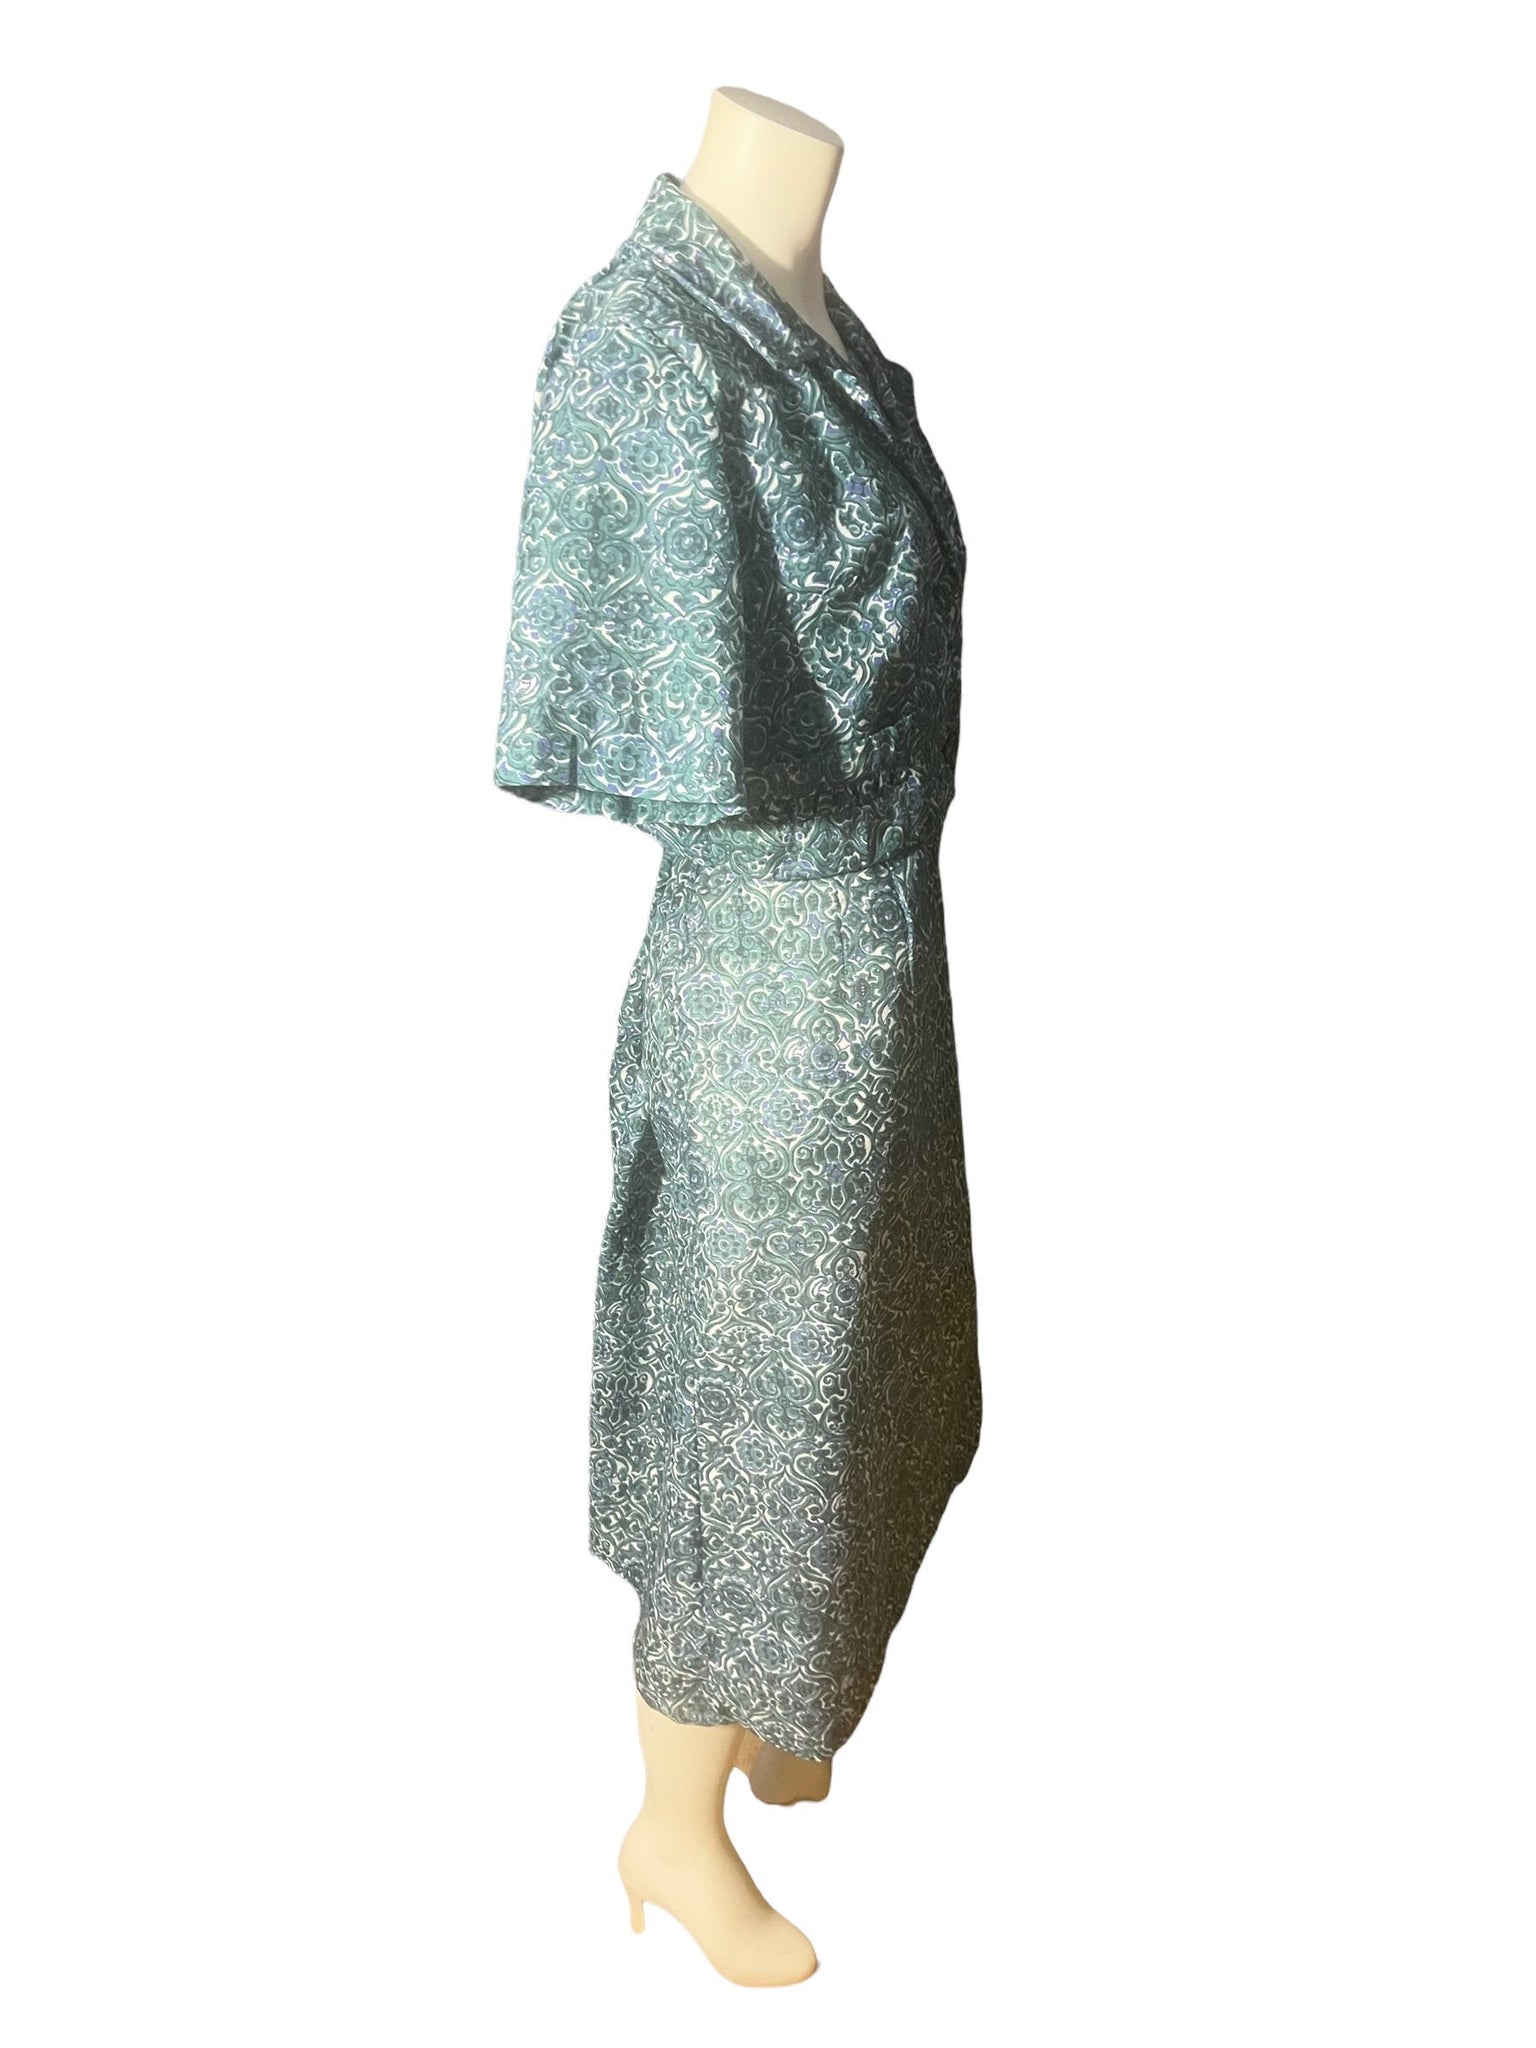 Vintage 1950's volup dress and jacket L XL